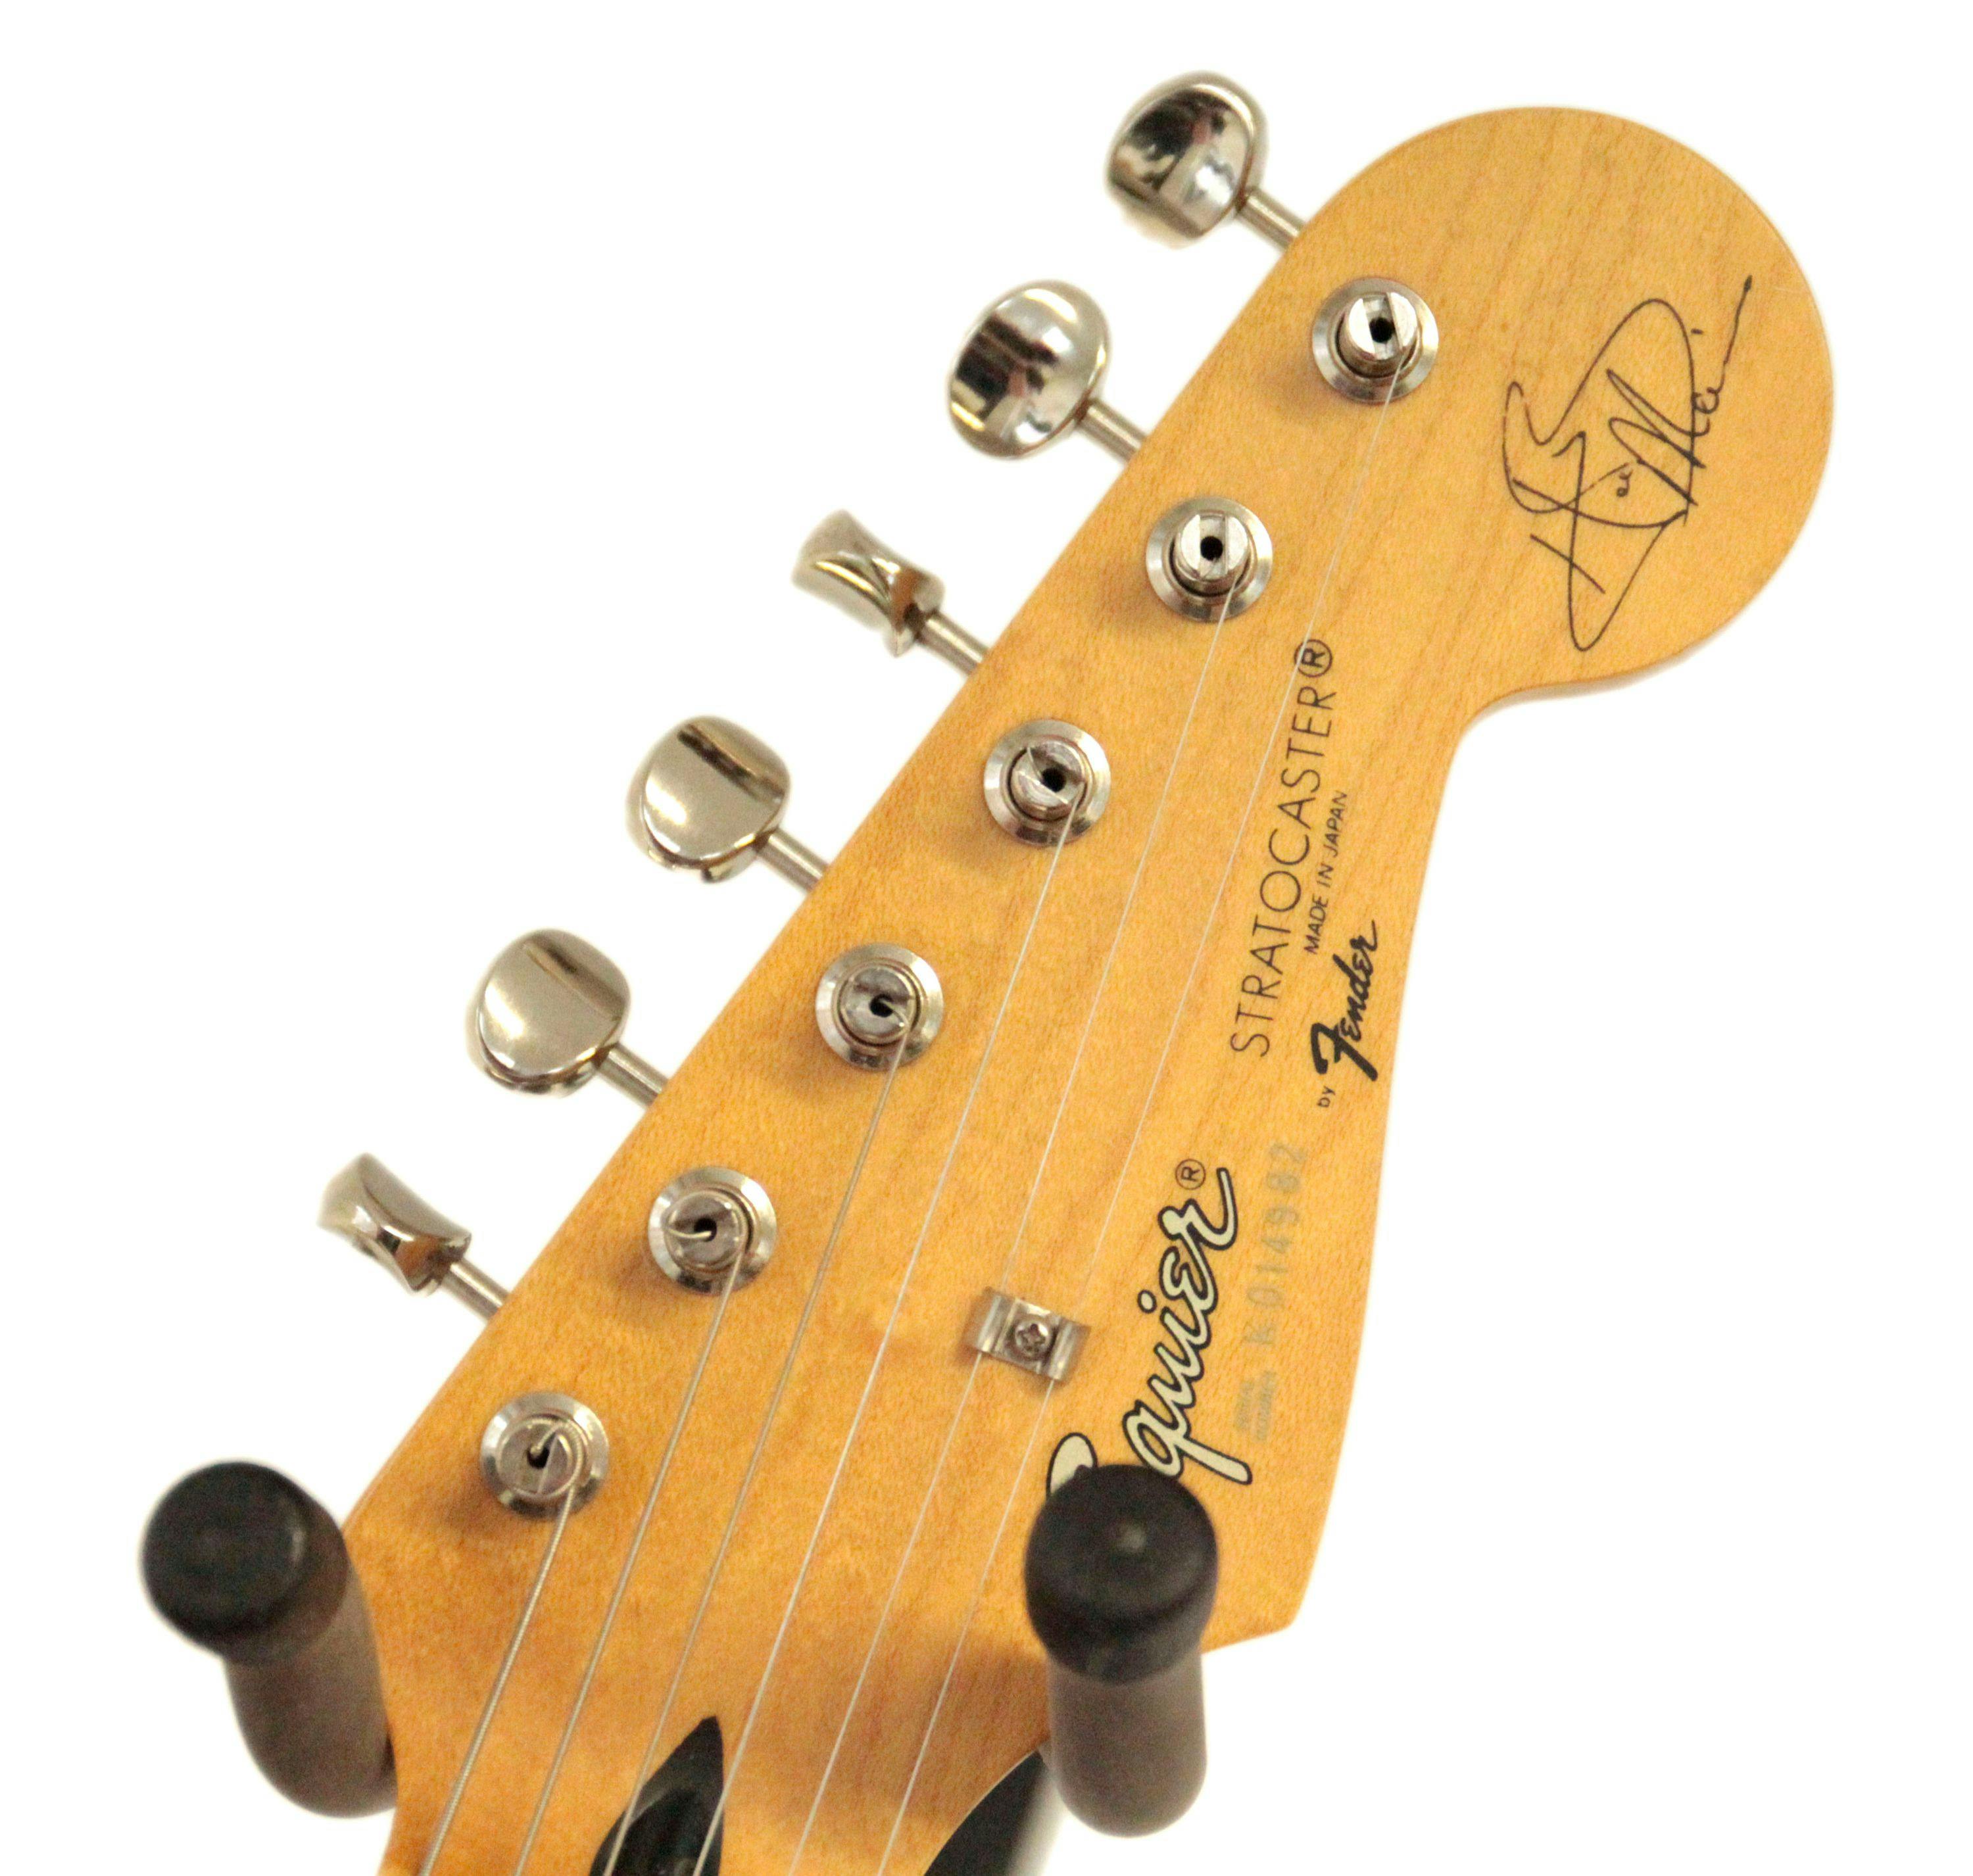 Strat squier japan made in Fender: Fender